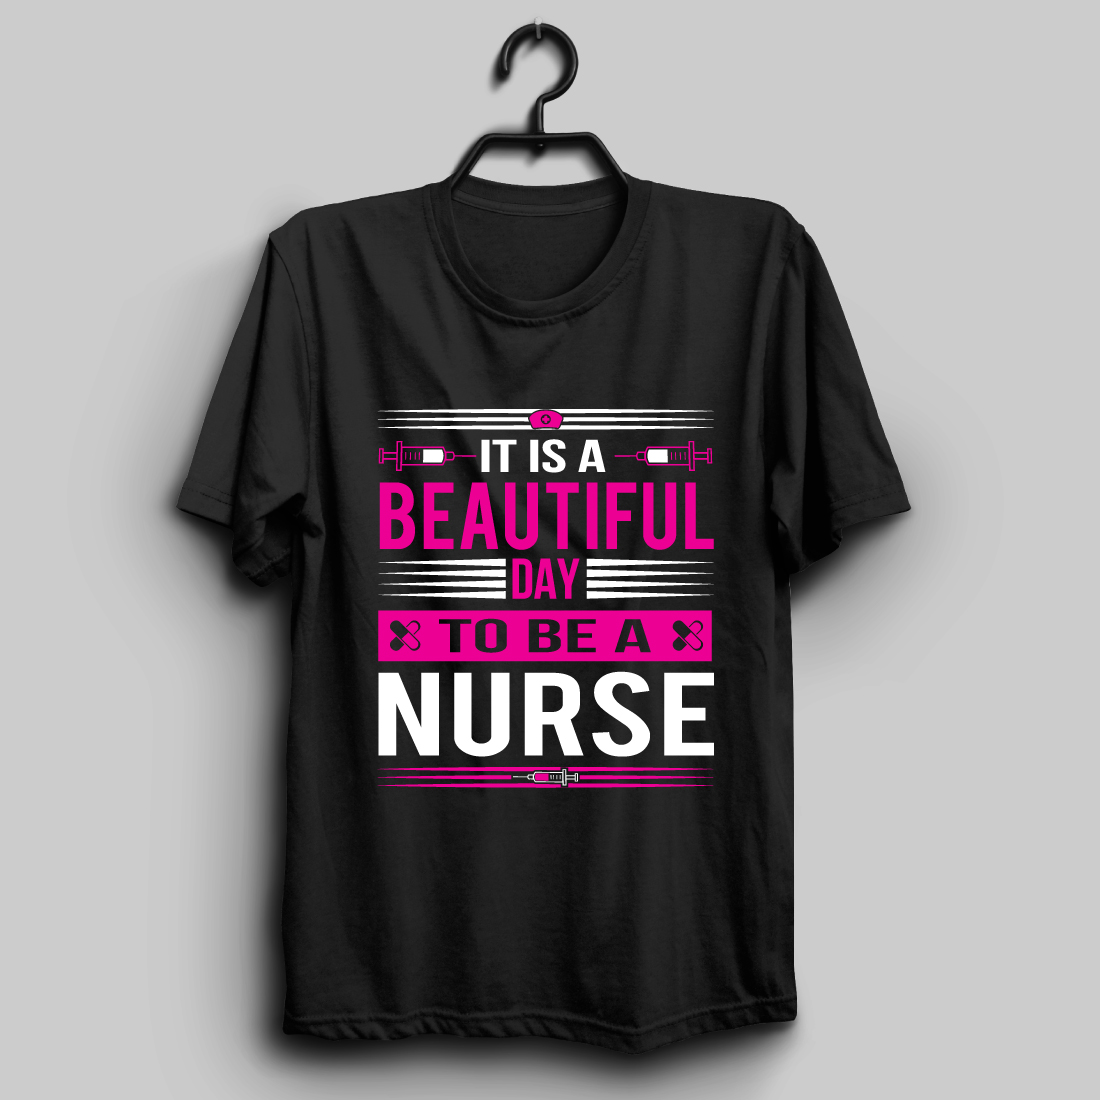 nurse t shirt design01 704